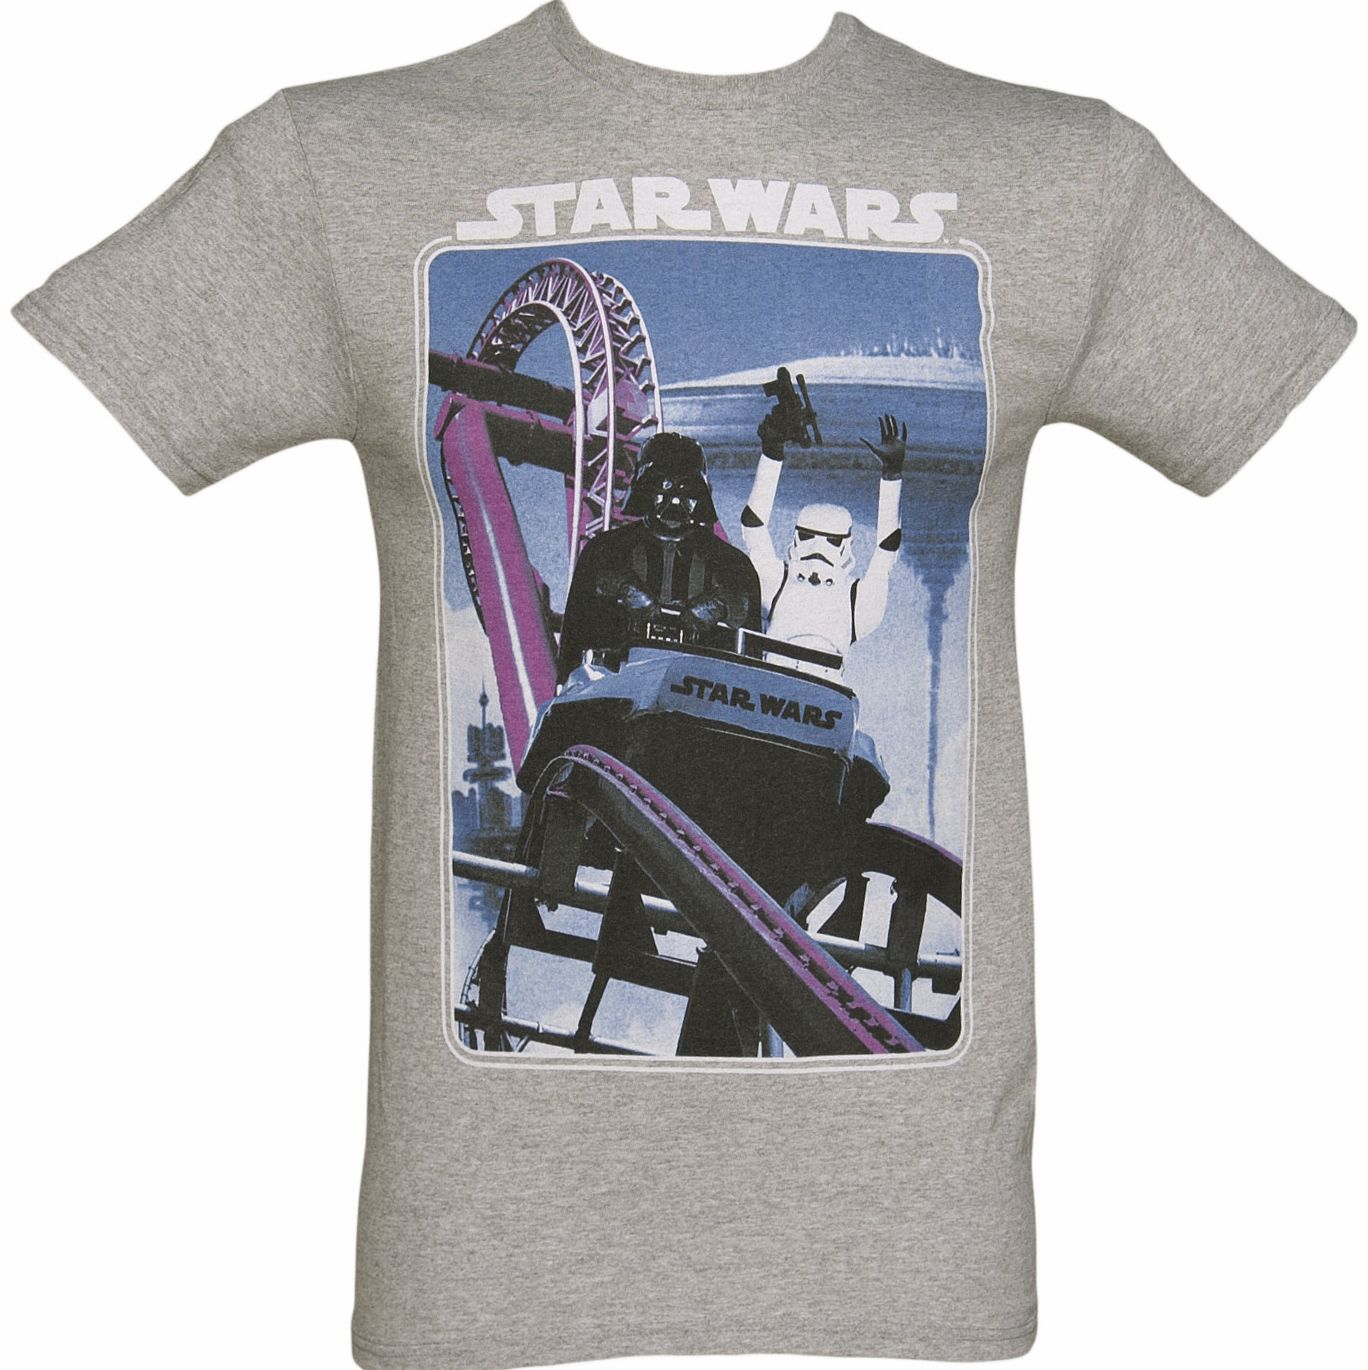 Grey Marl Star Wars Rollercoaster T-Shirt